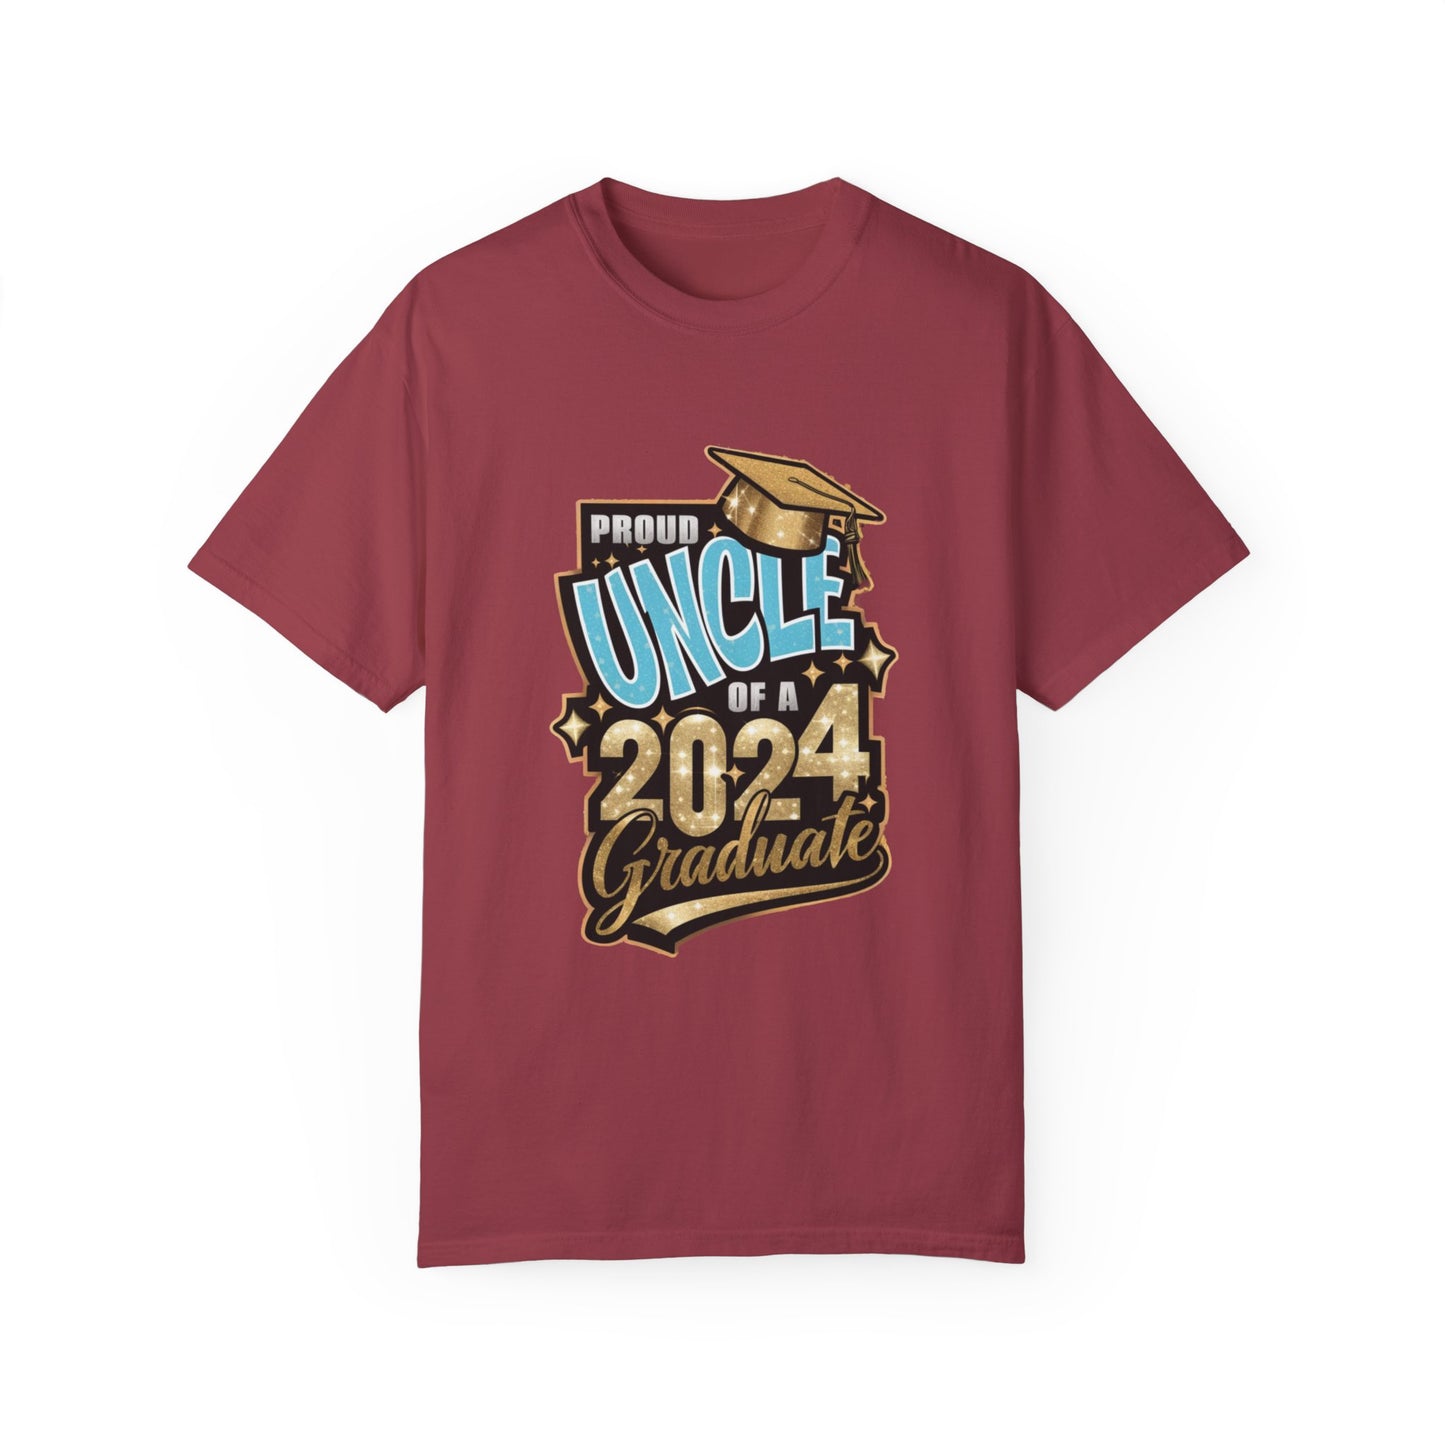 Proud Uncle of a 2024 Graduate Unisex Garment-dyed T-shirt Cotton Funny Humorous Graphic Soft Premium Unisex Men Women Chili T-shirt Birthday Gift-7